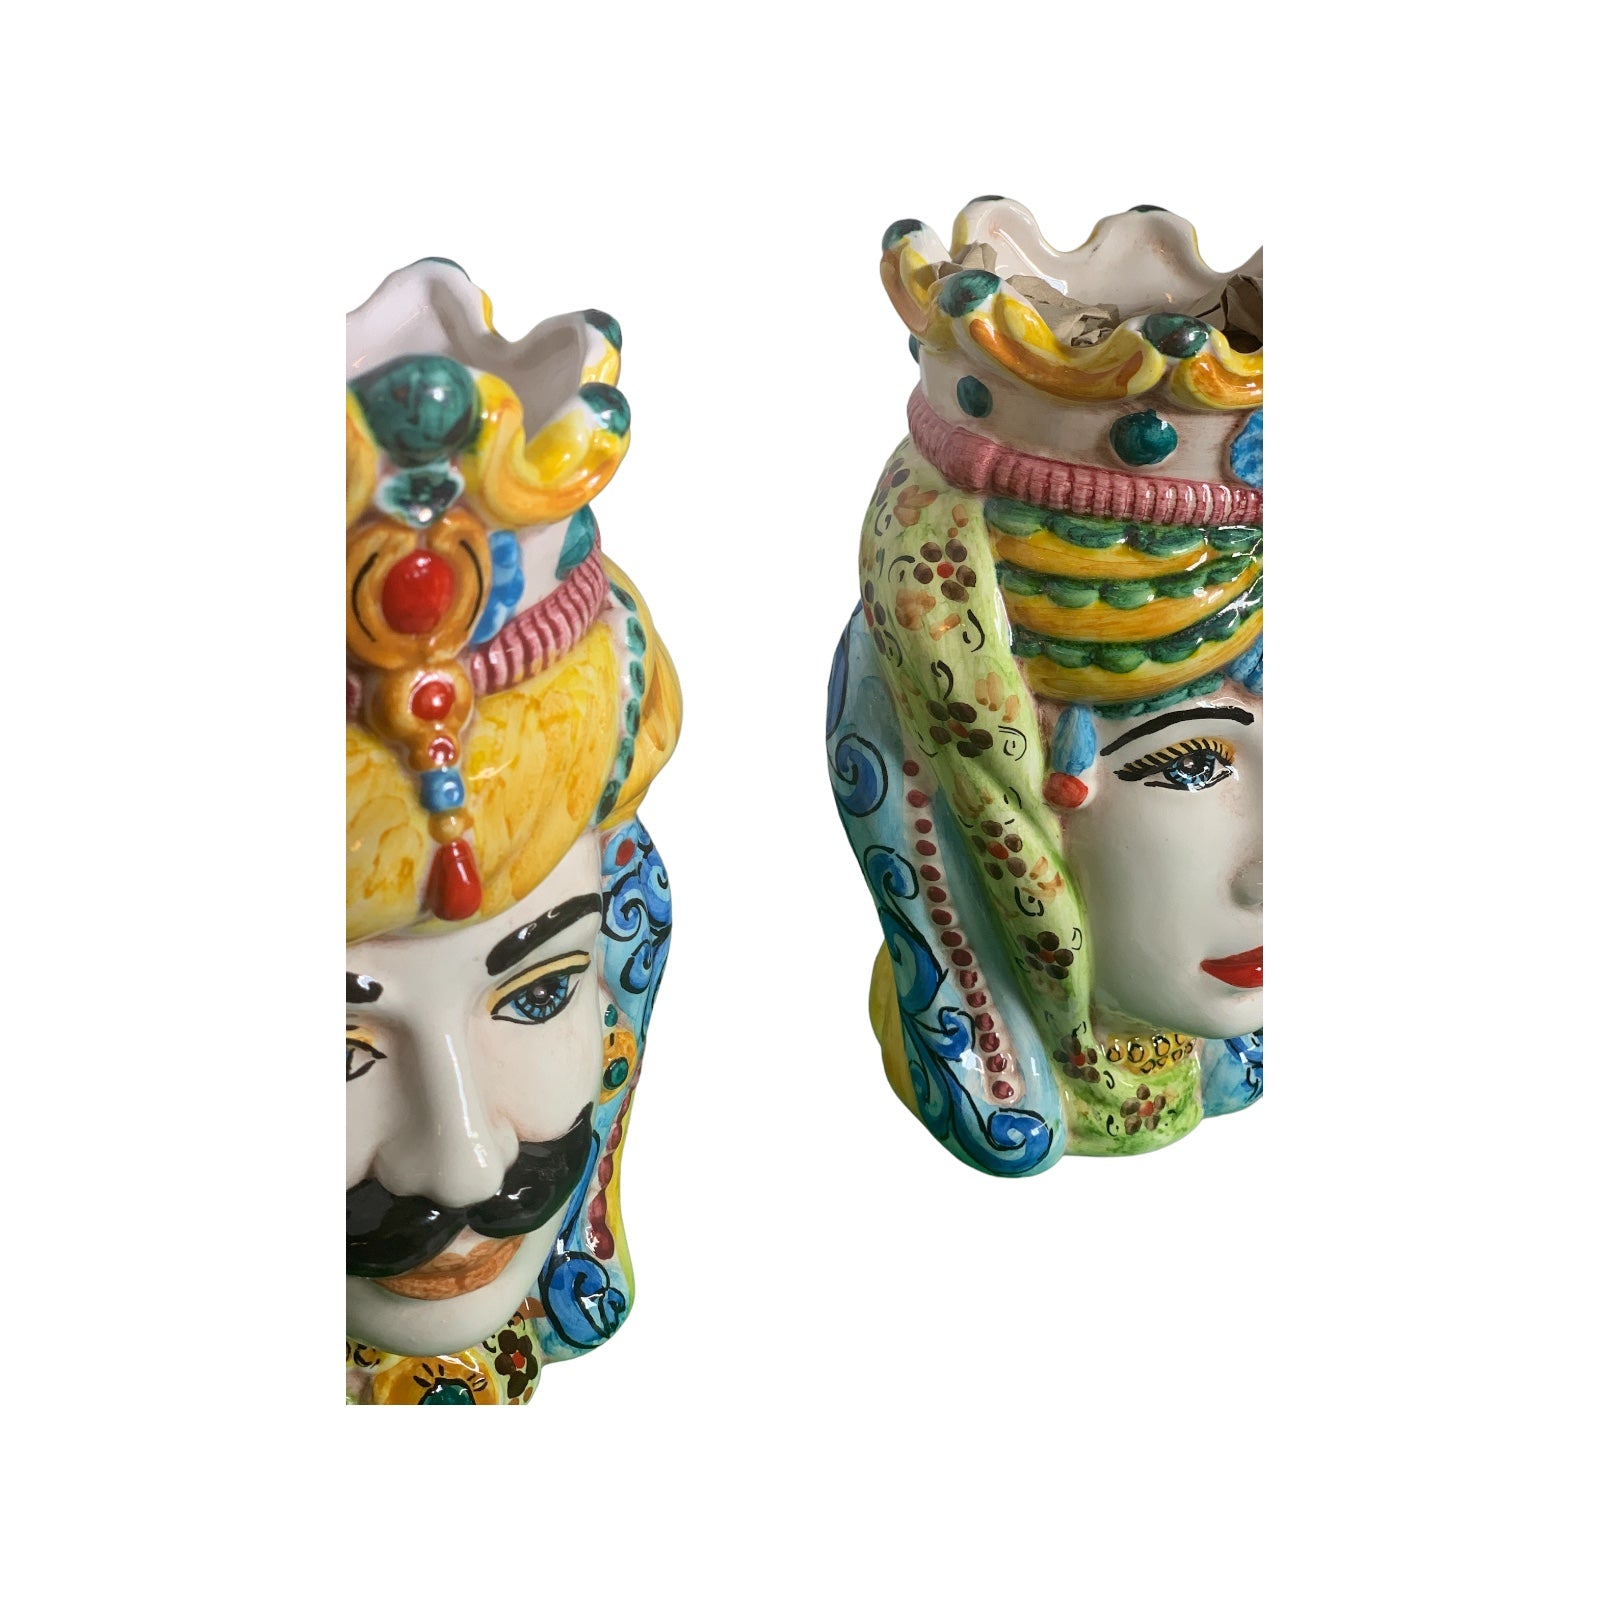 Couple of Teste Di Moro in Caltagirone ceramic, h approx. 18 cm. Crown and turban